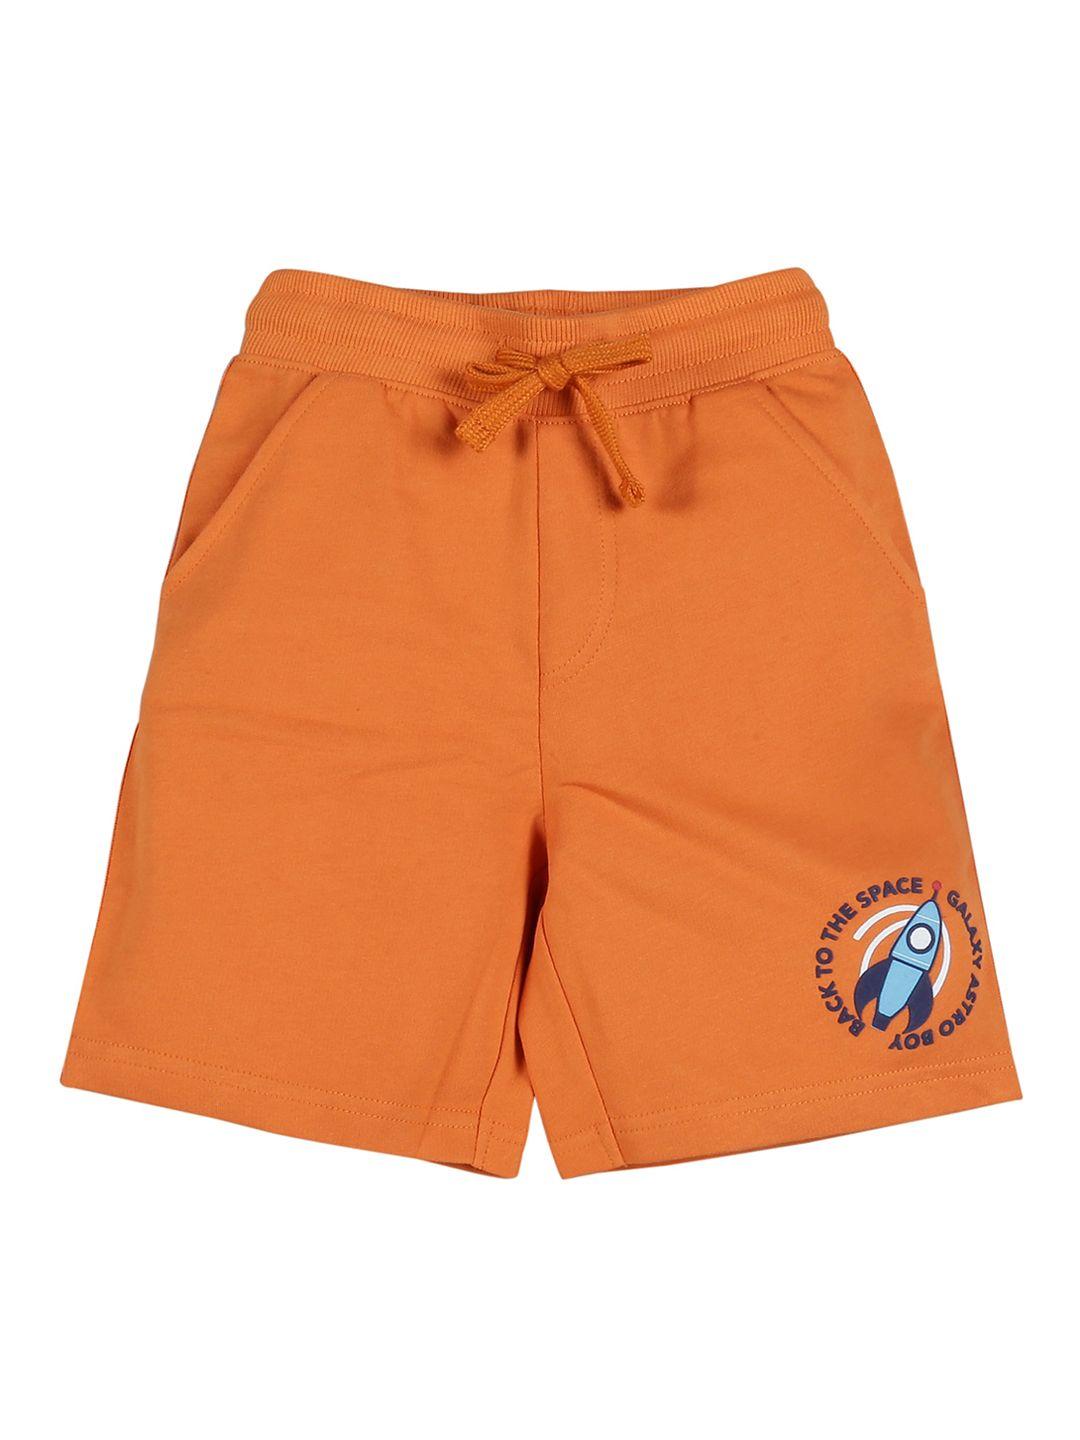 plum-tree-boys-orange-regular-shorts